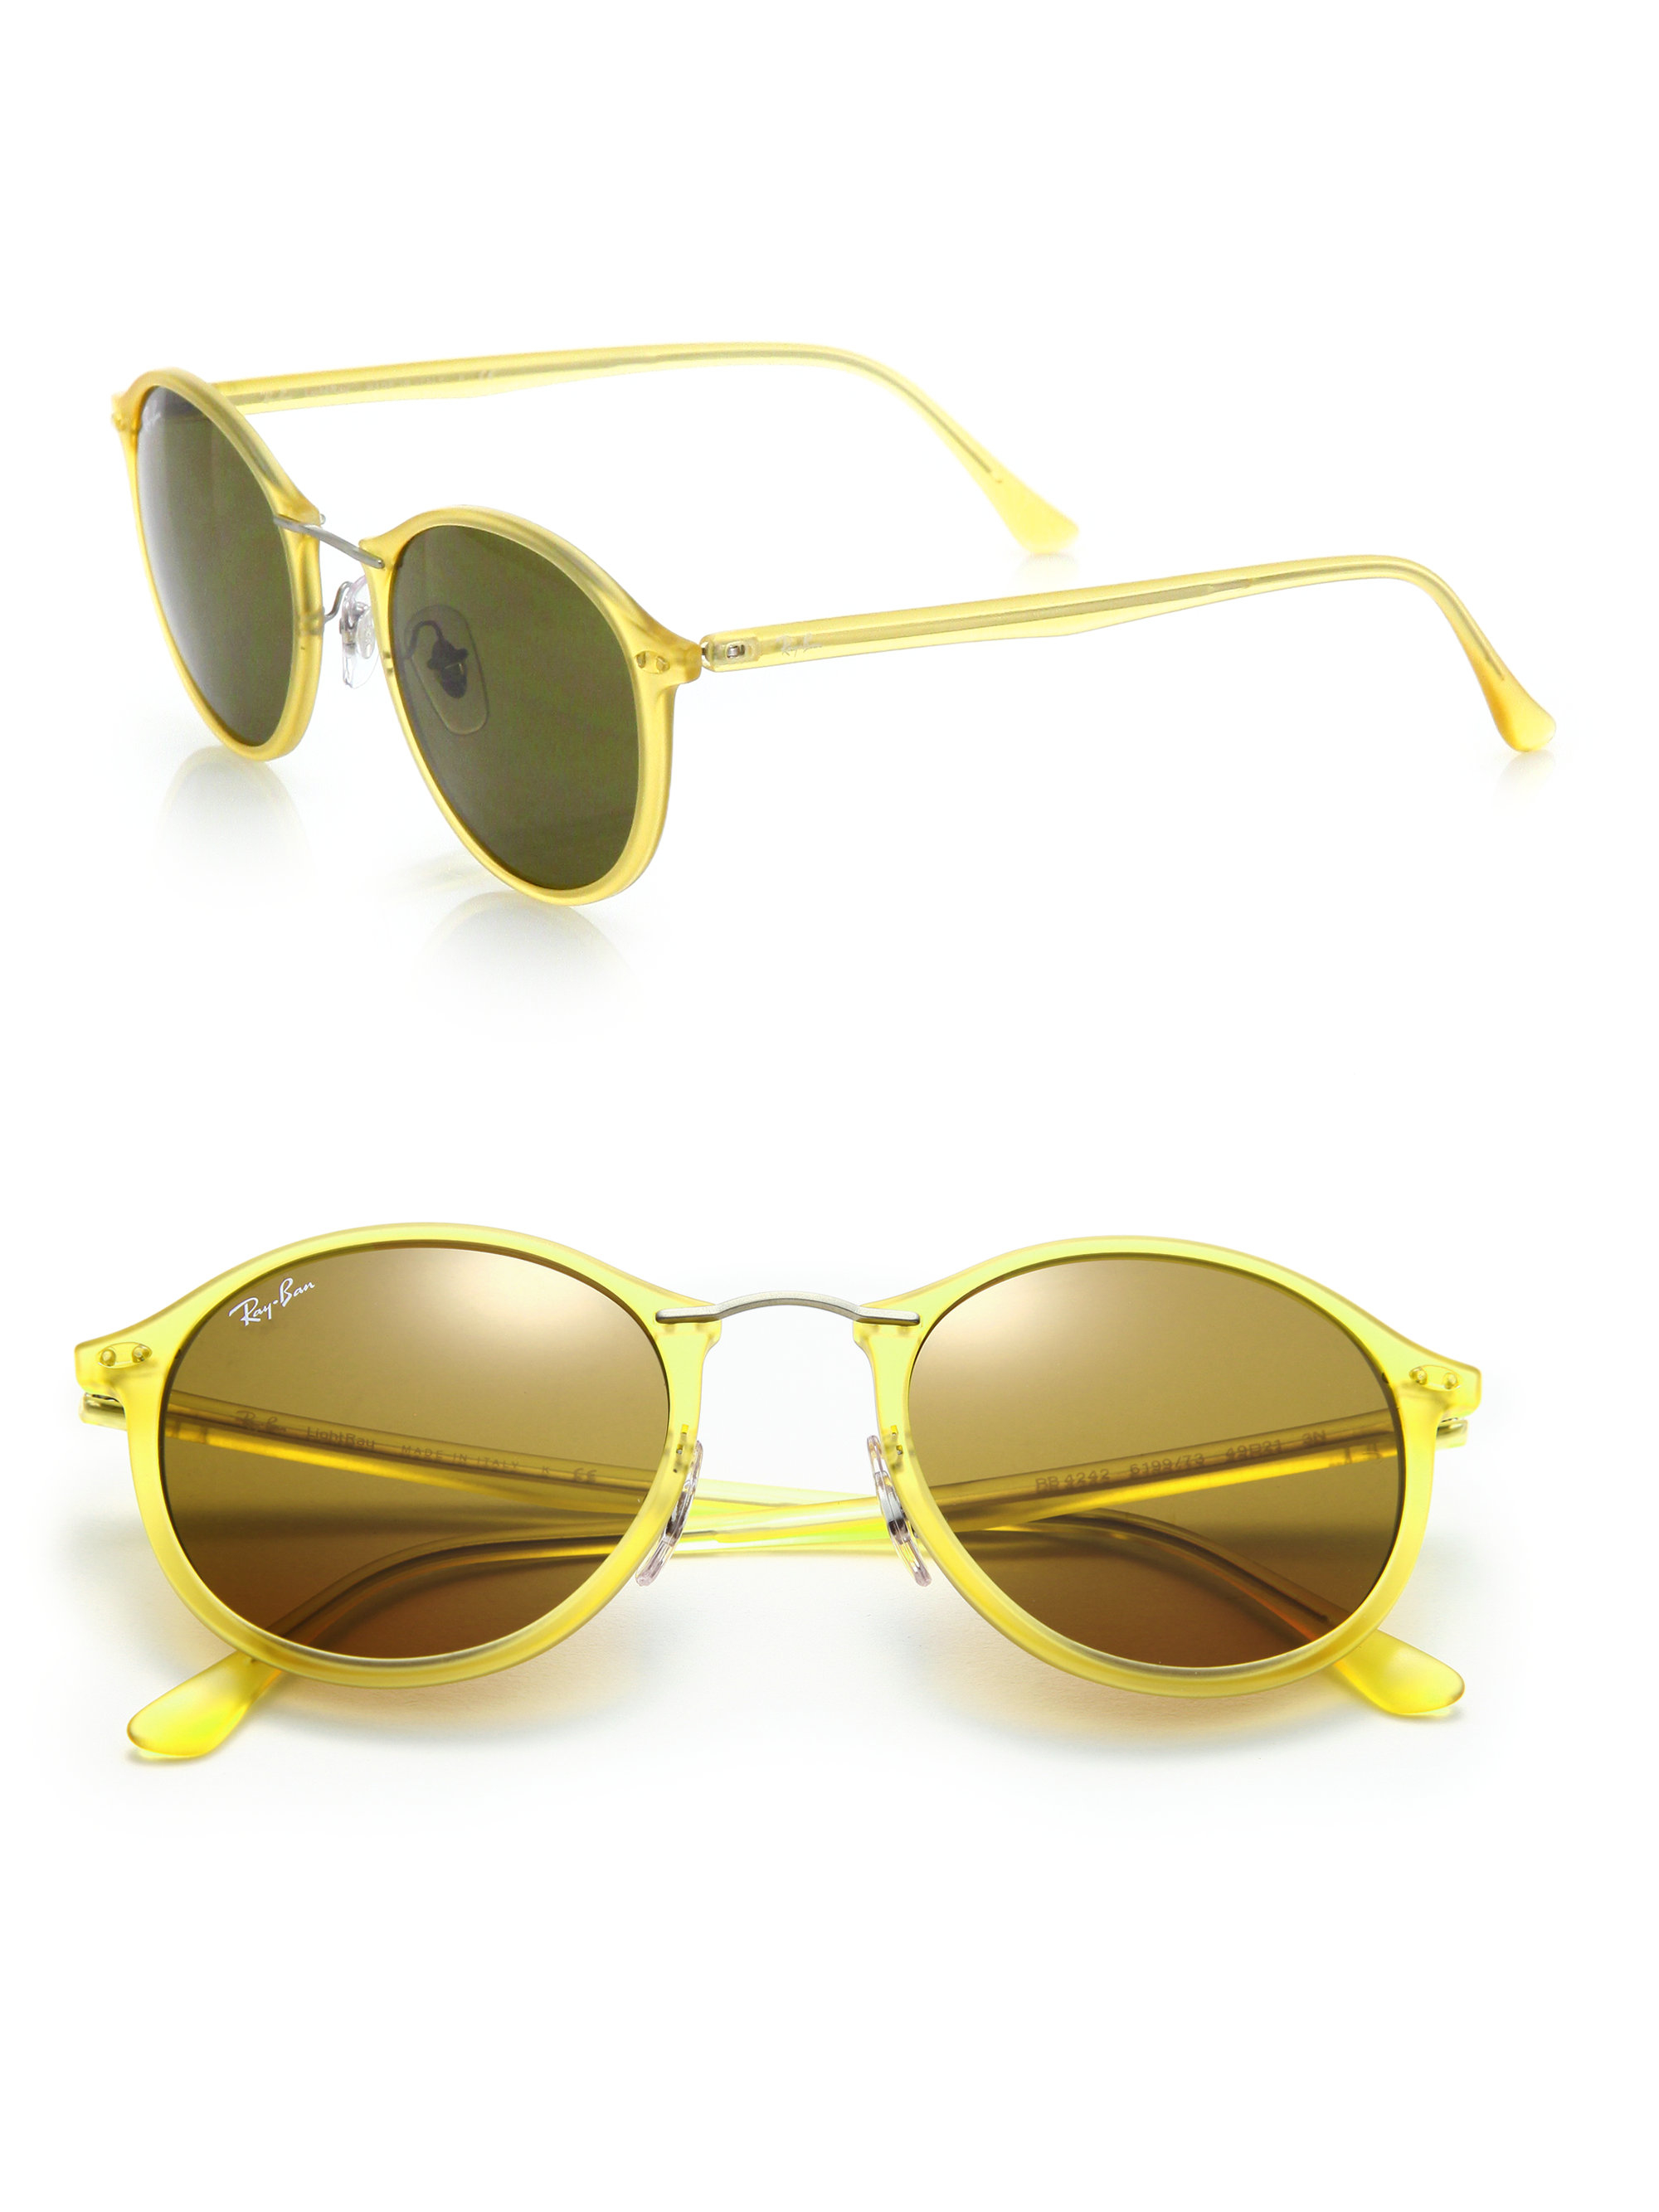 ray ban sunglasses yellow frame